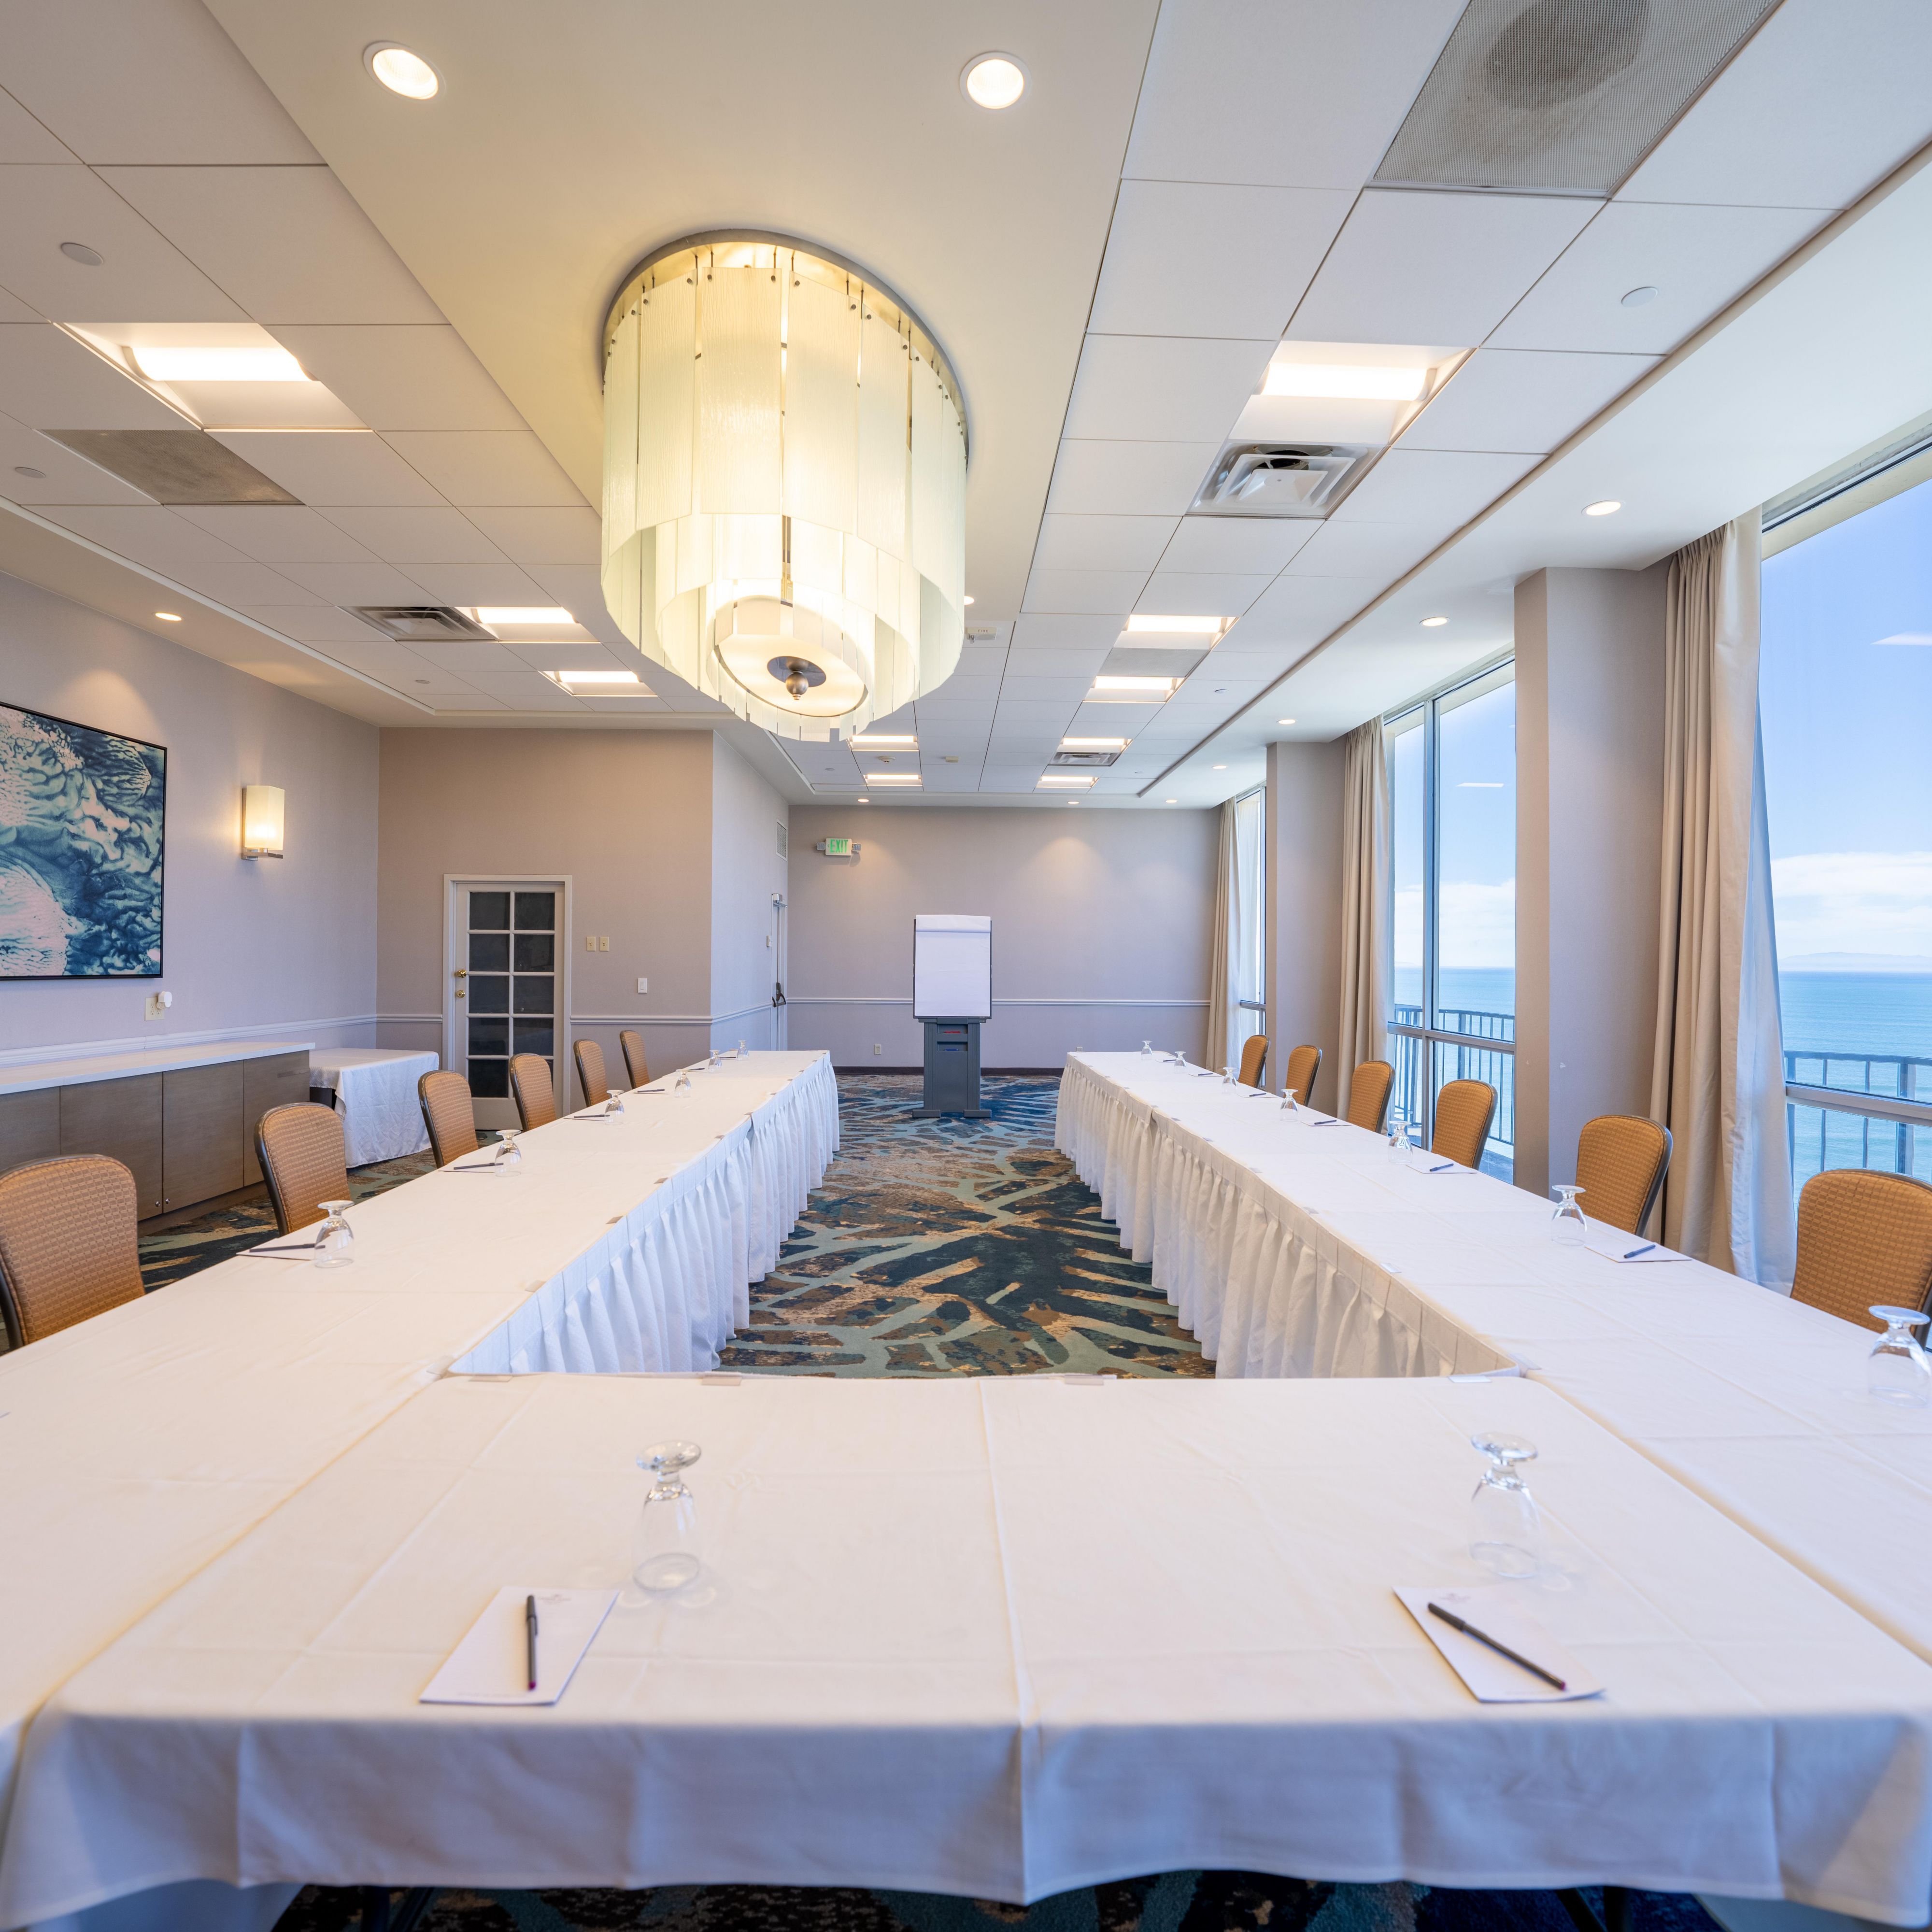 Bay View room, an ocean view meeting room on the top floor